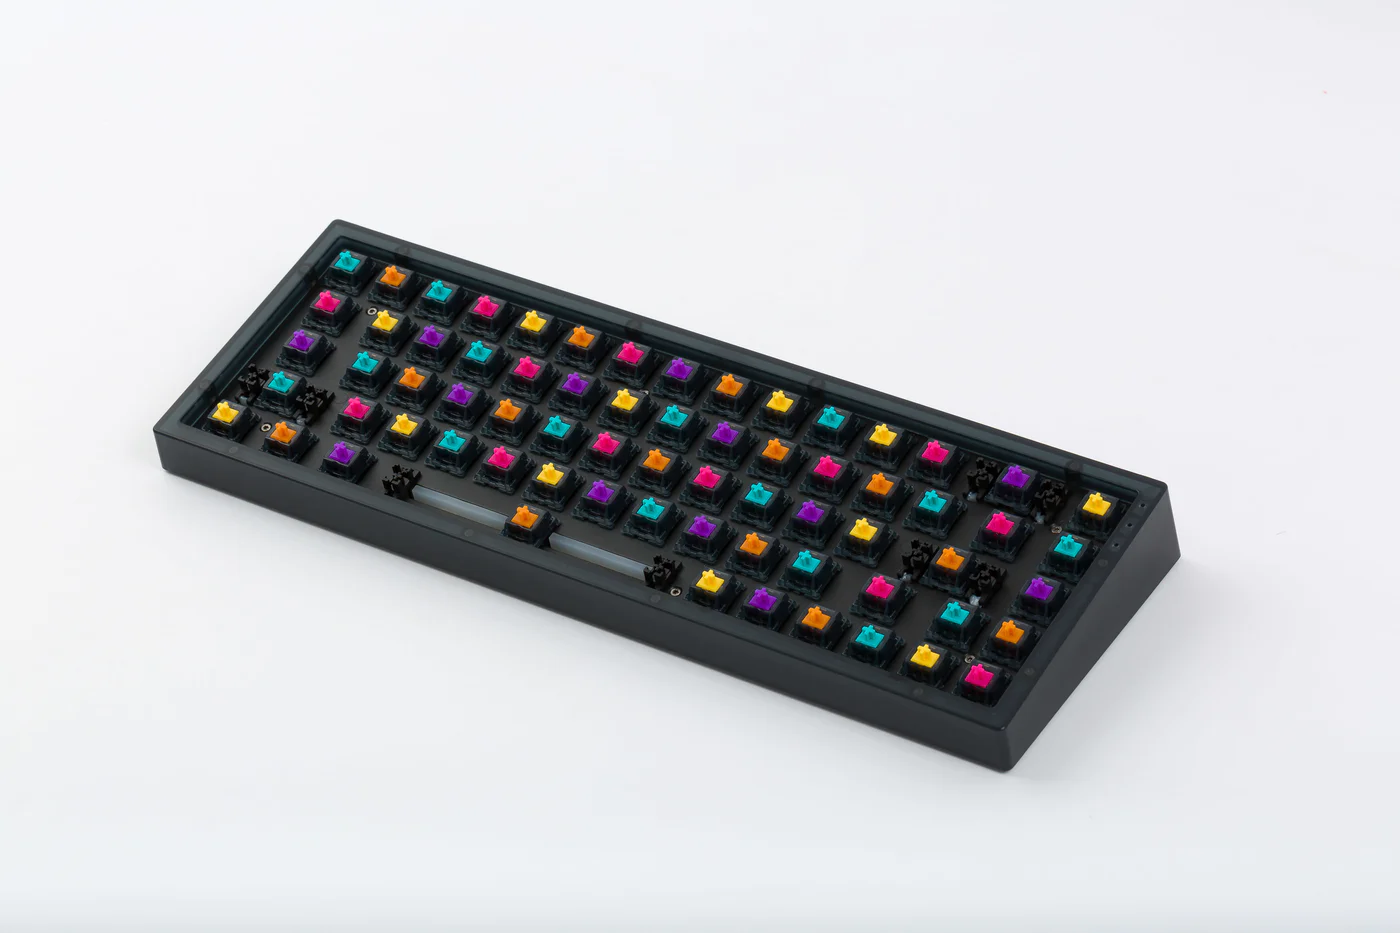 NK65 - Mictlan Edition 地下世界特别版机械键盘套件- zFrontier 装备前线